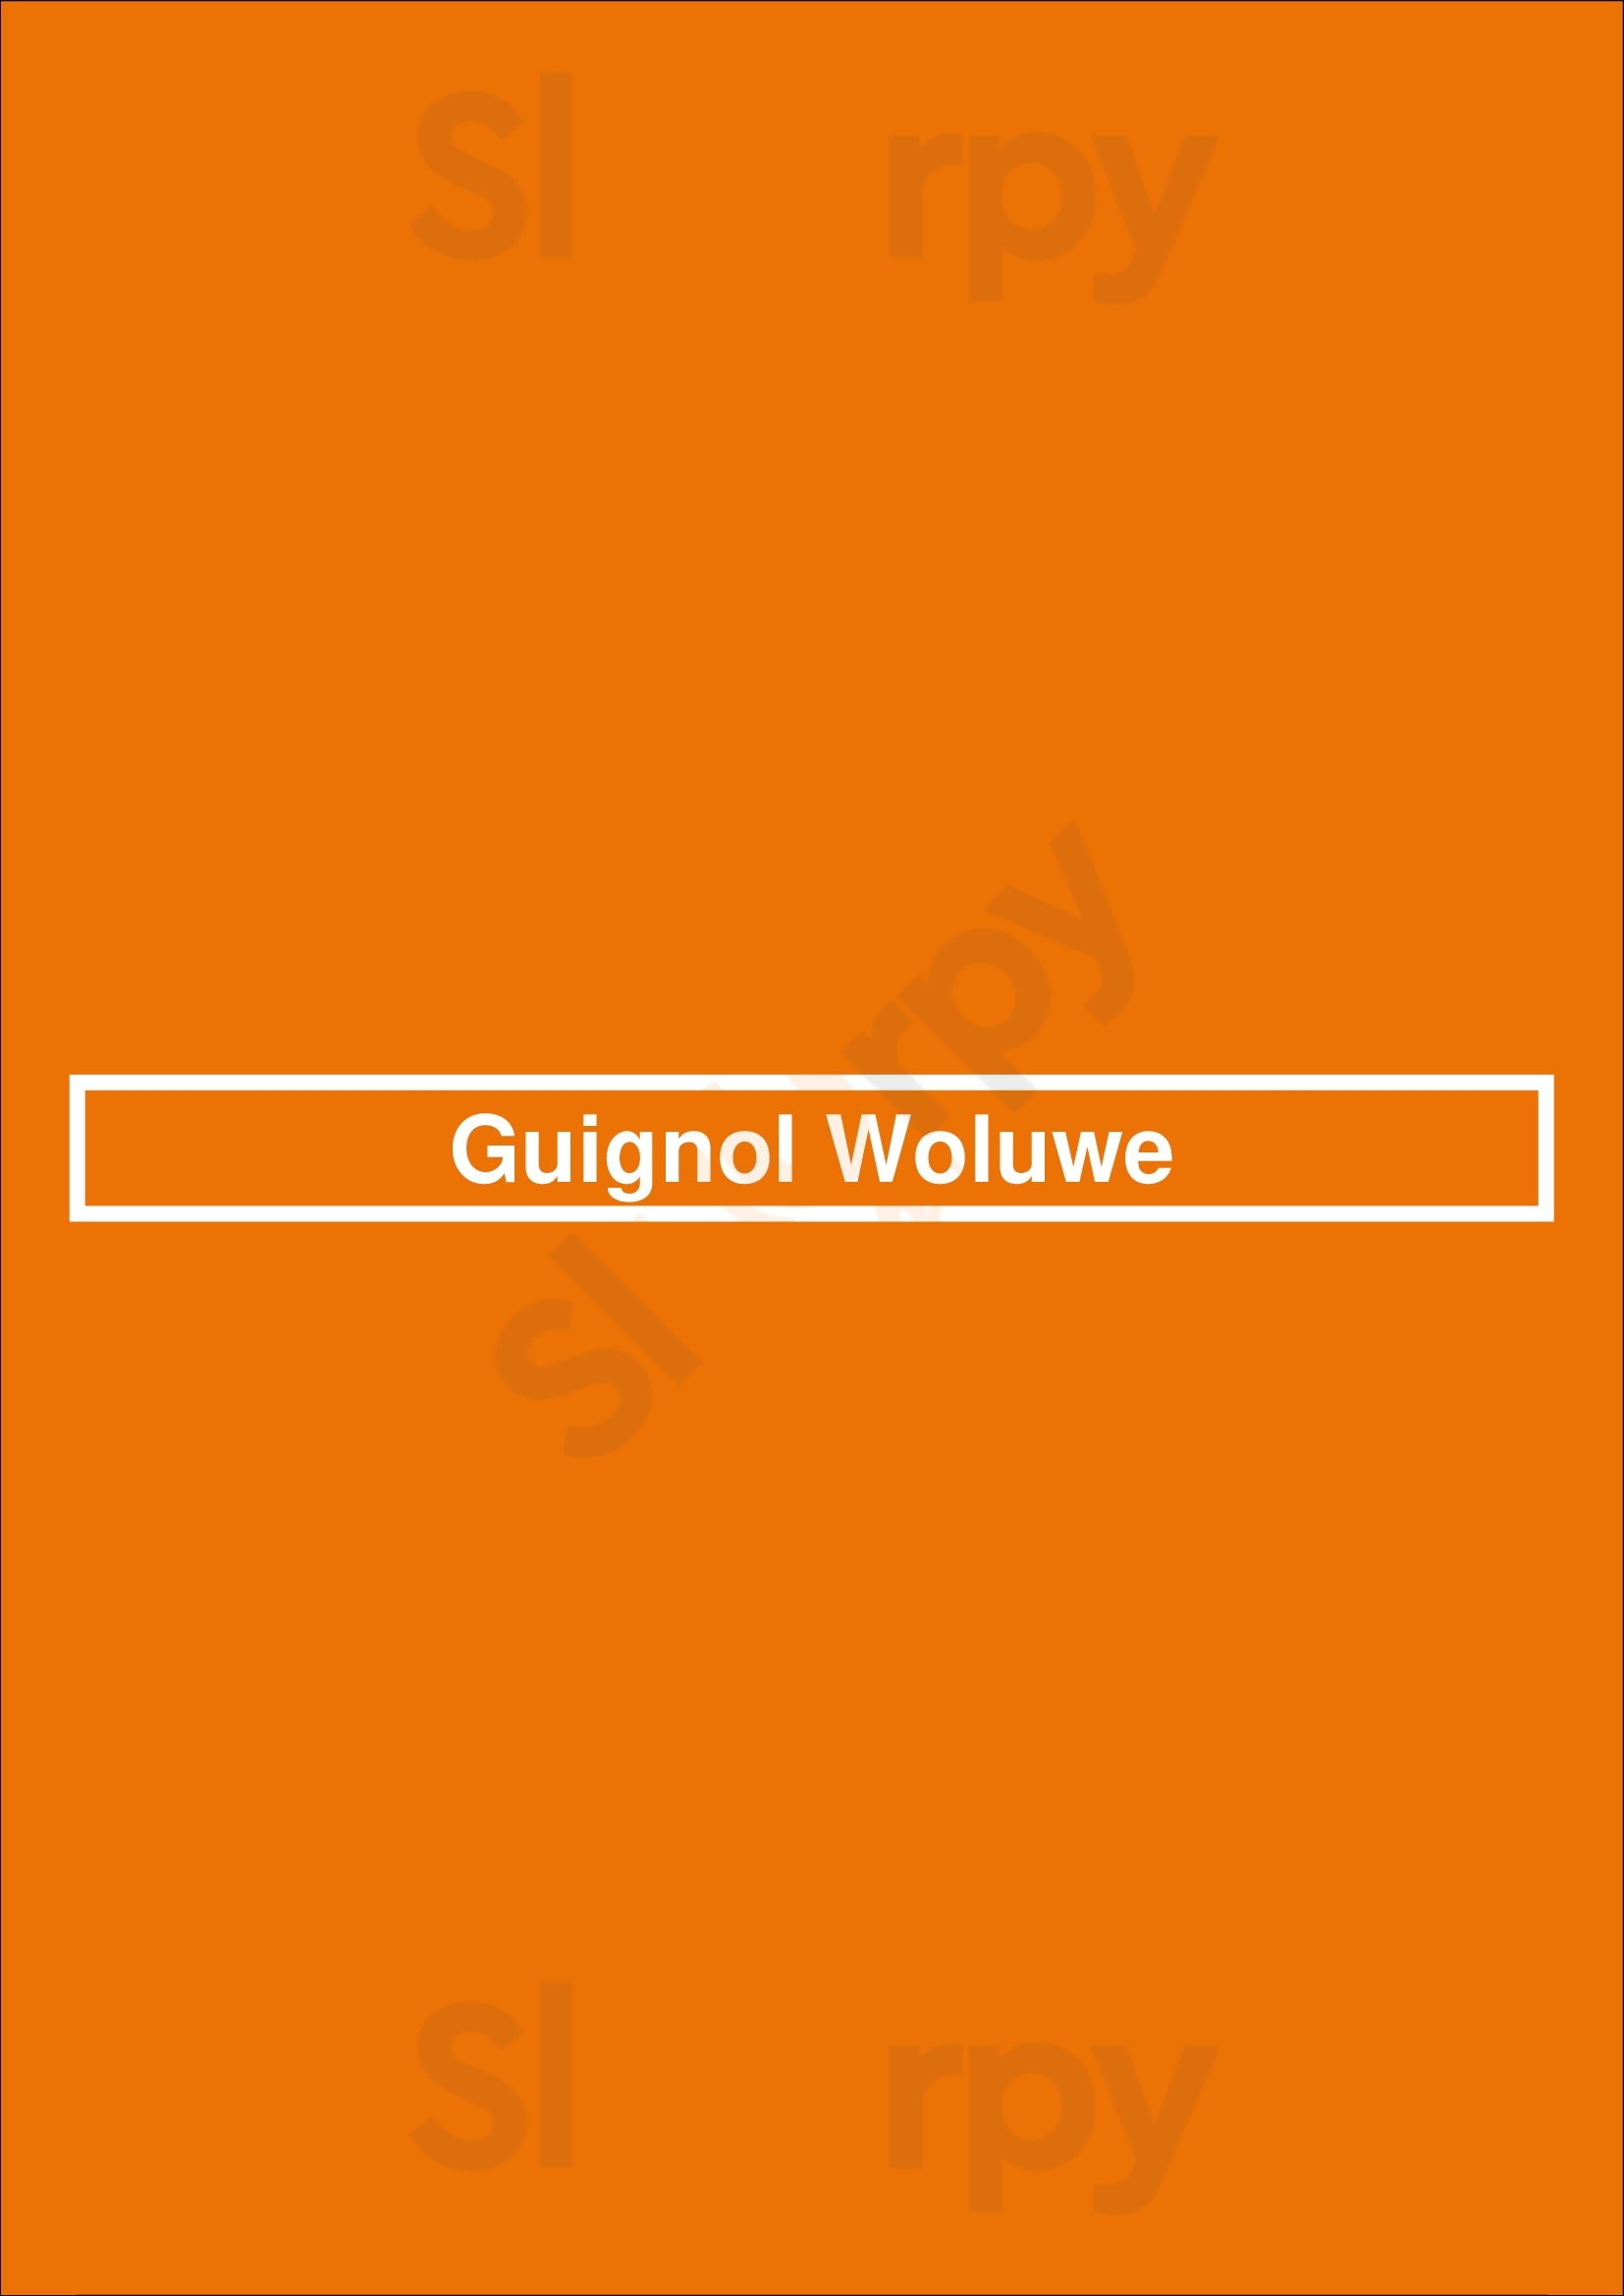 Guignol Woluwe Bruxelles Menu - 1